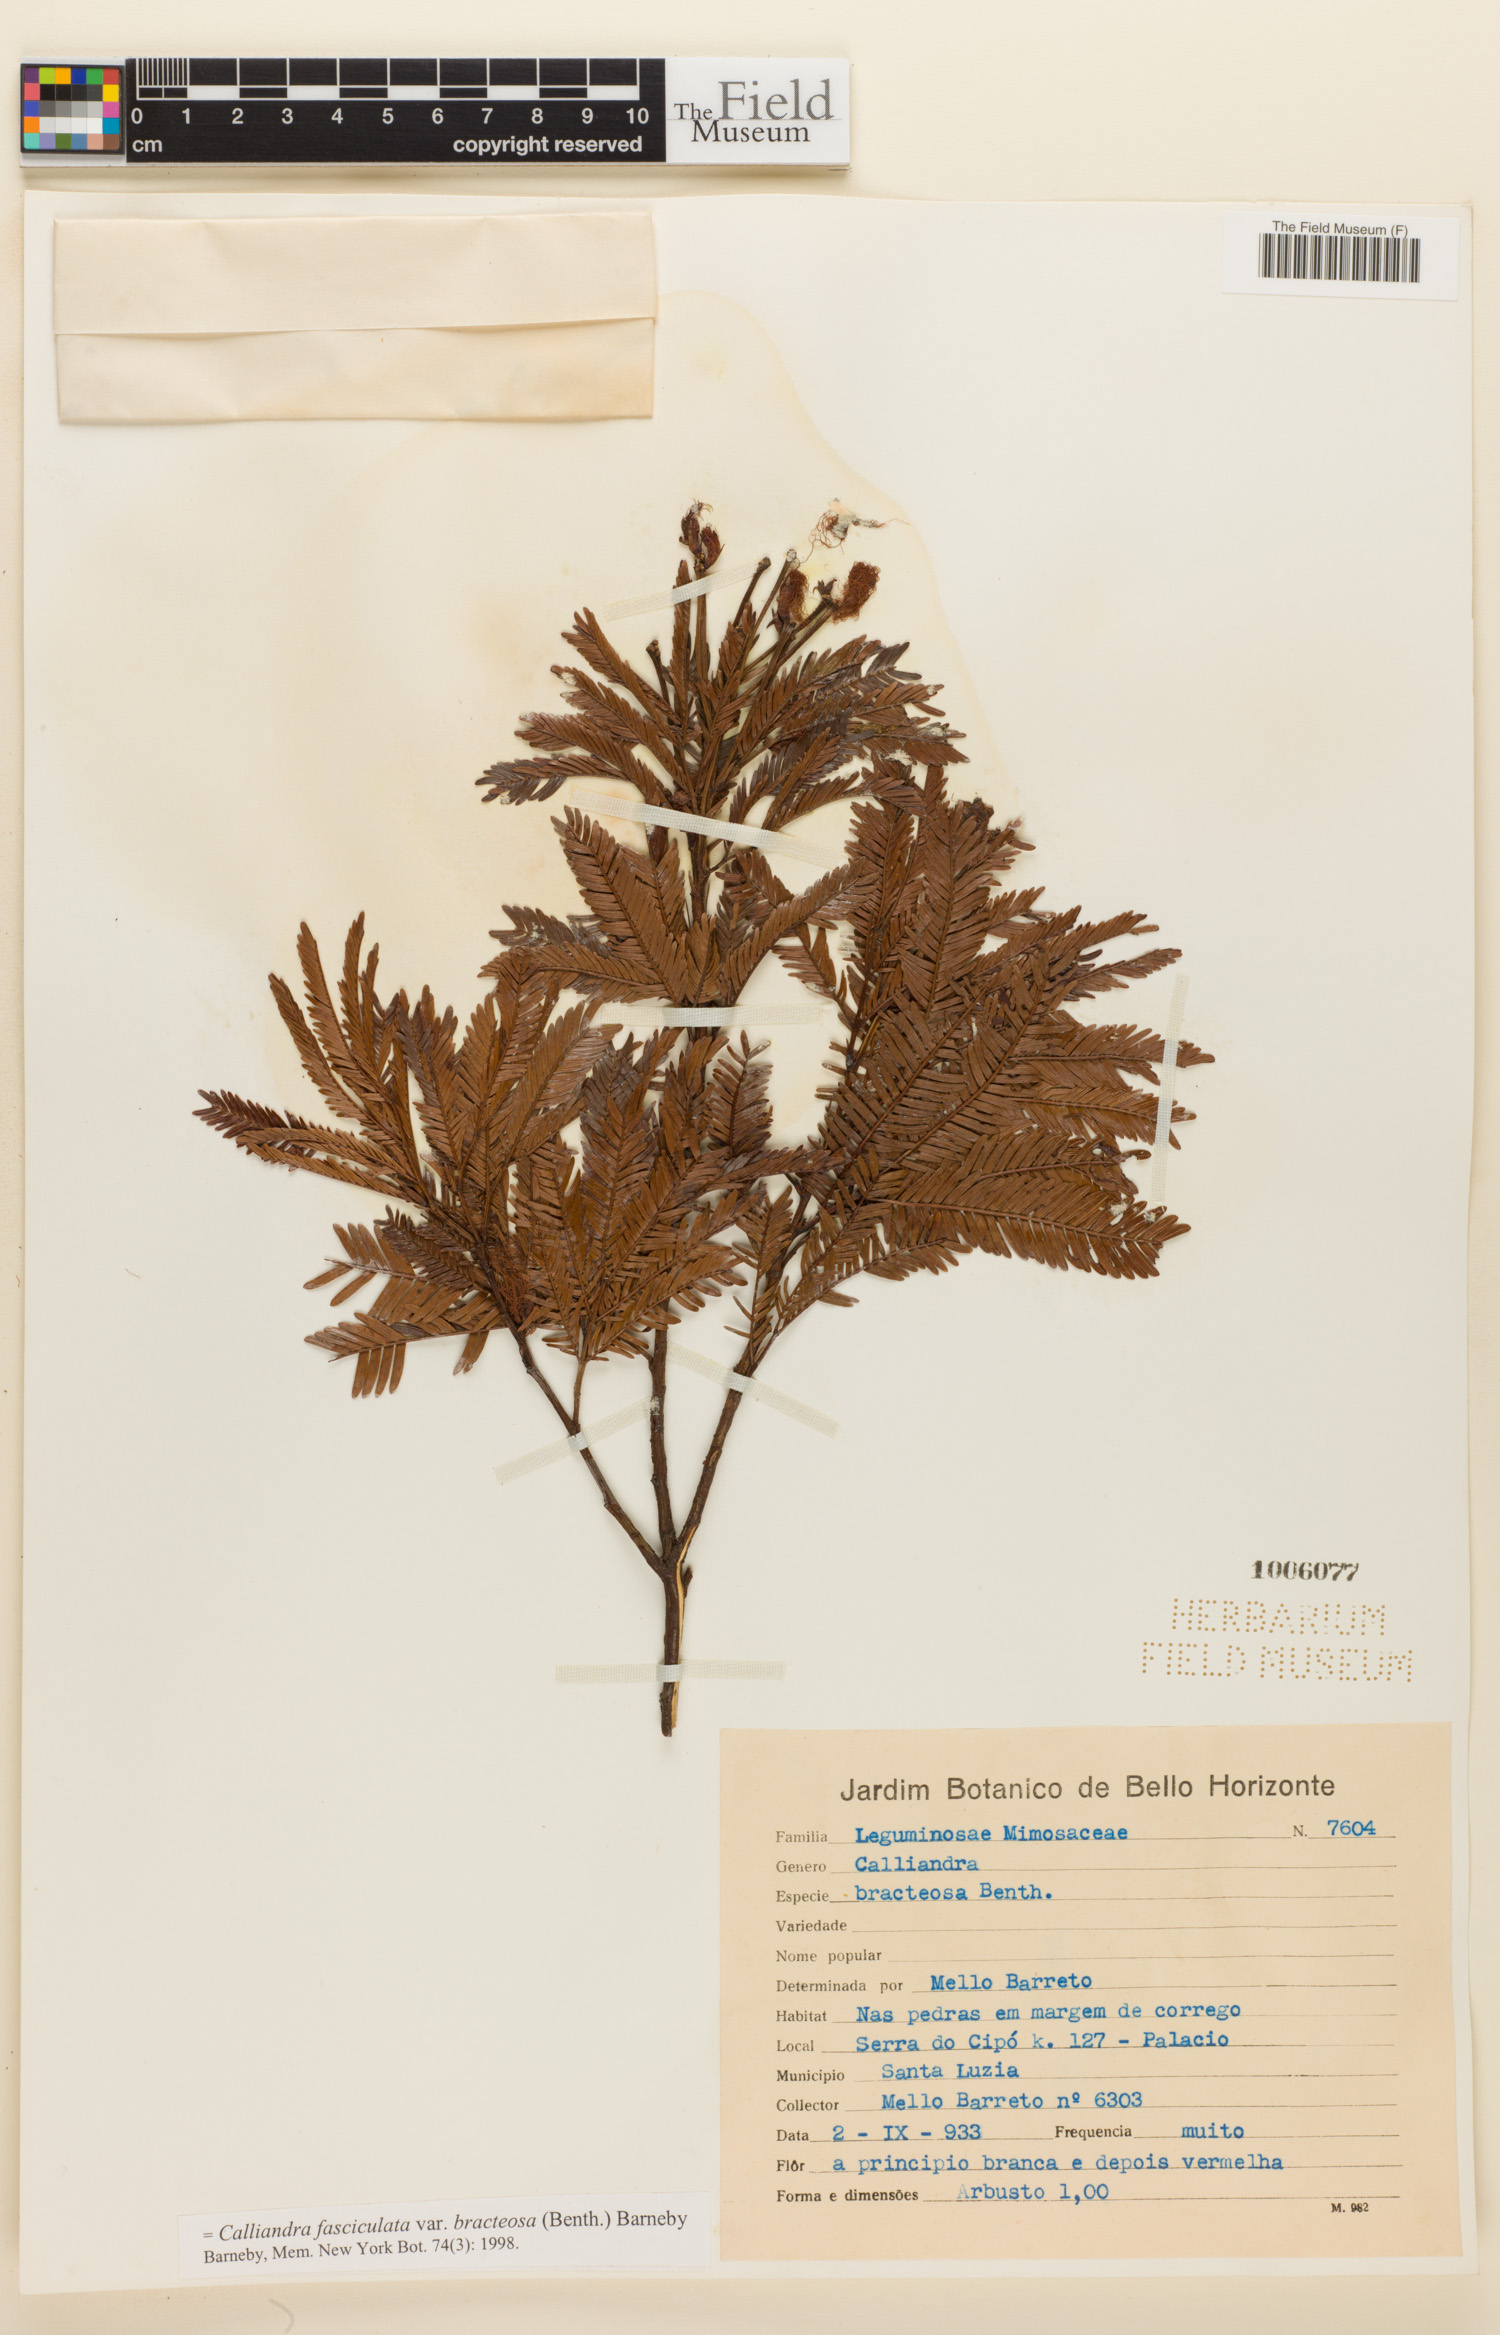 Calliandra fasciculata image